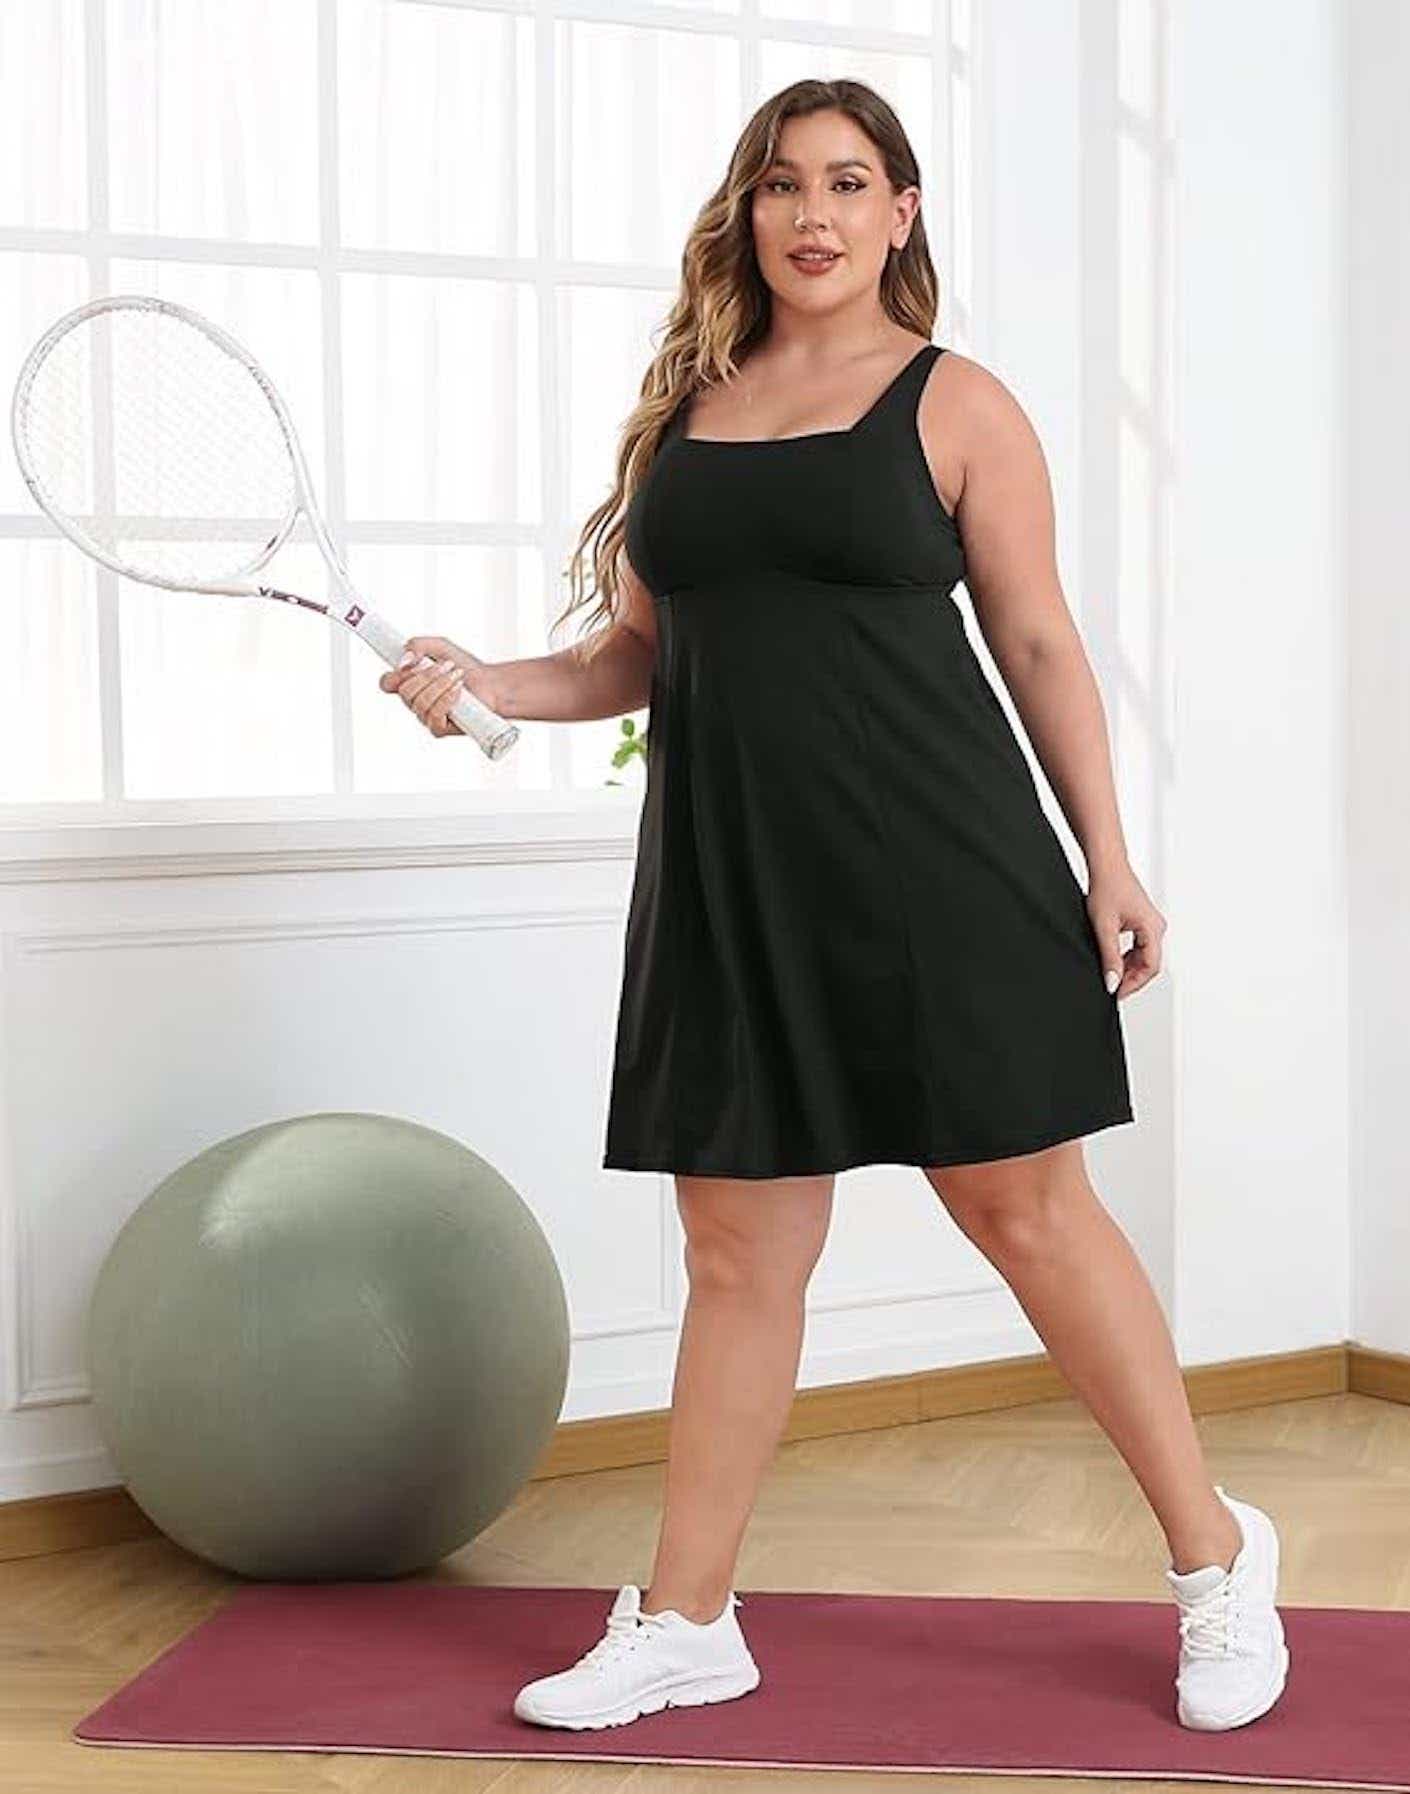 A black tennis dress.